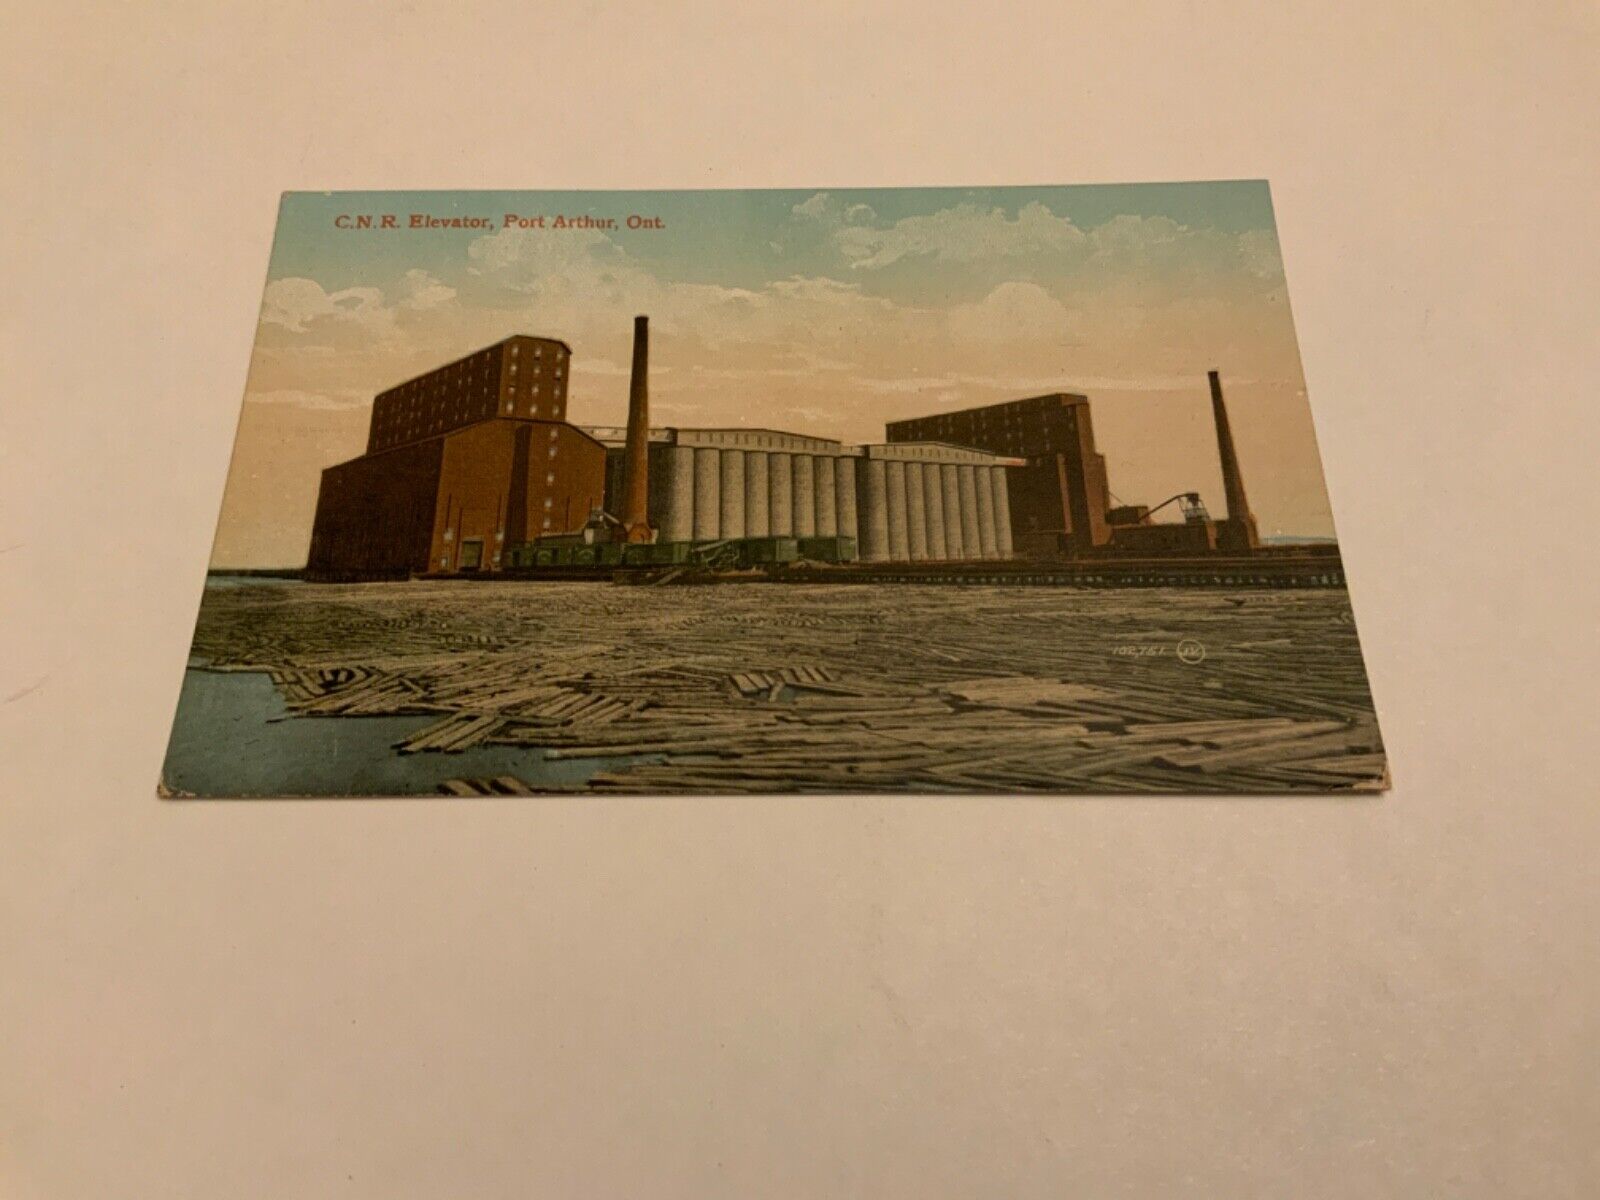 Port Arthur, Ontario ~ C.N.R. Elevator - 1963 Souvenir Vintage Postcard